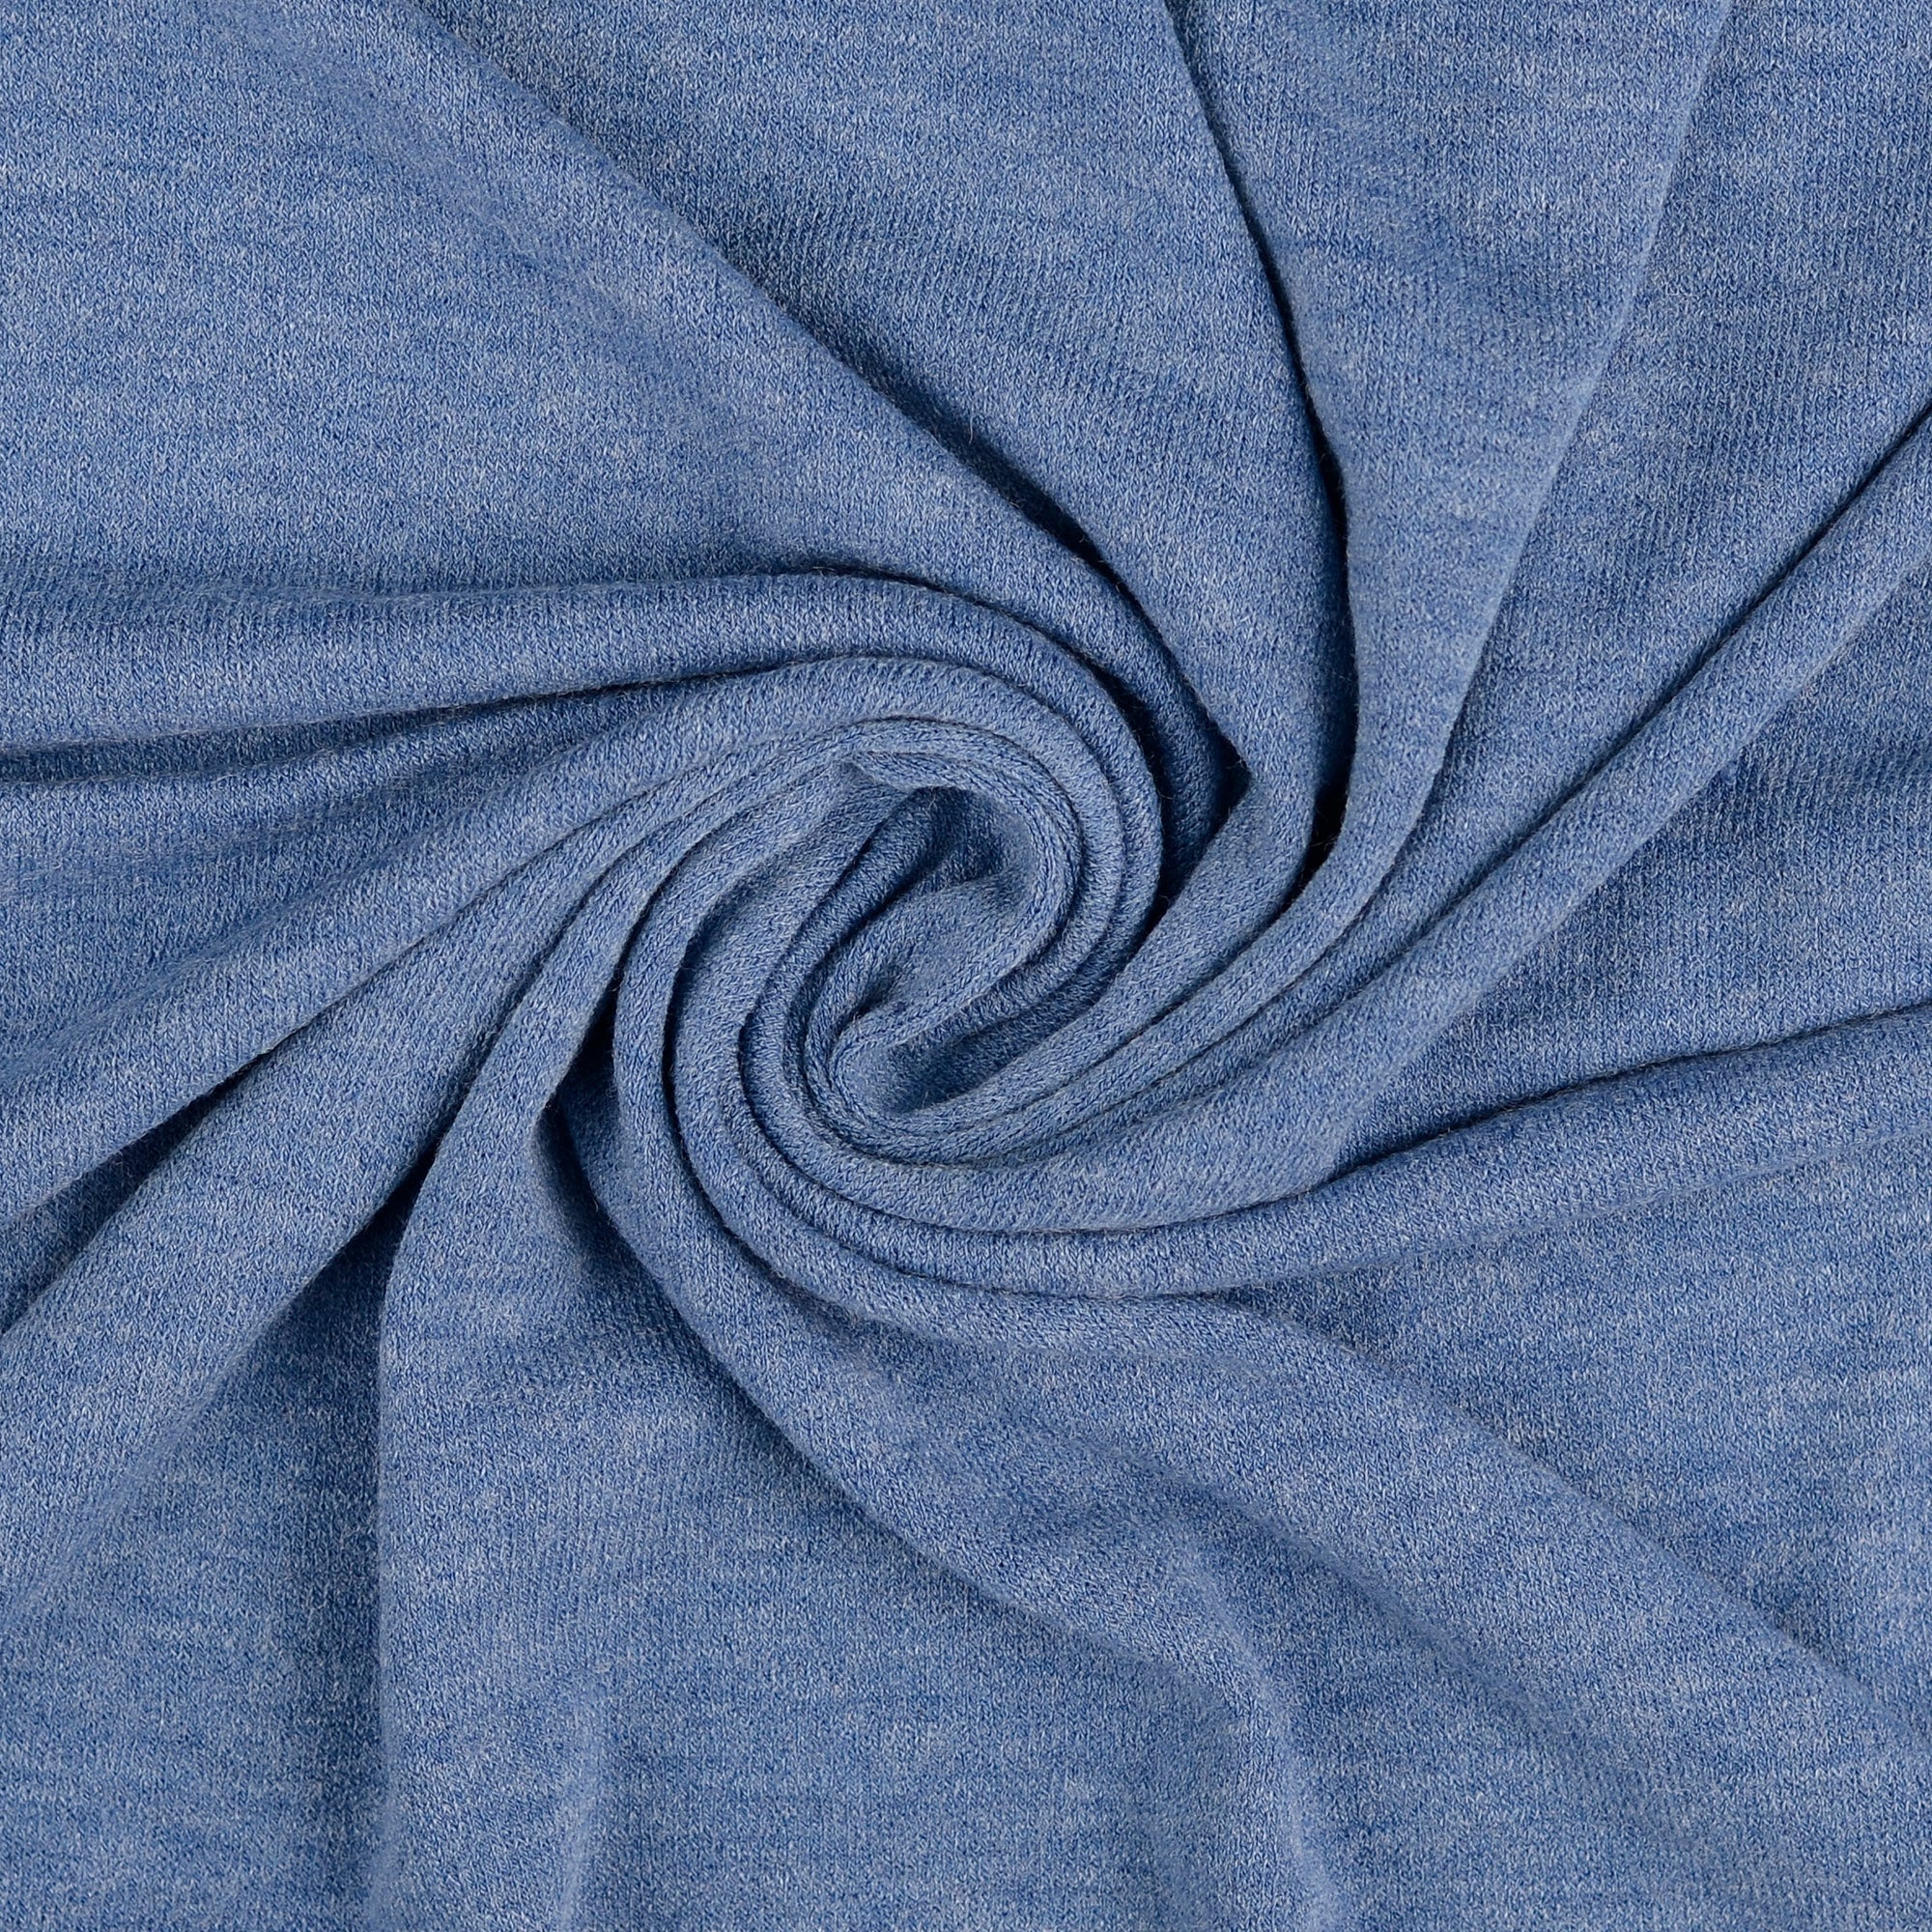 Comfy Viscose Blend Sweater Knit in Blue